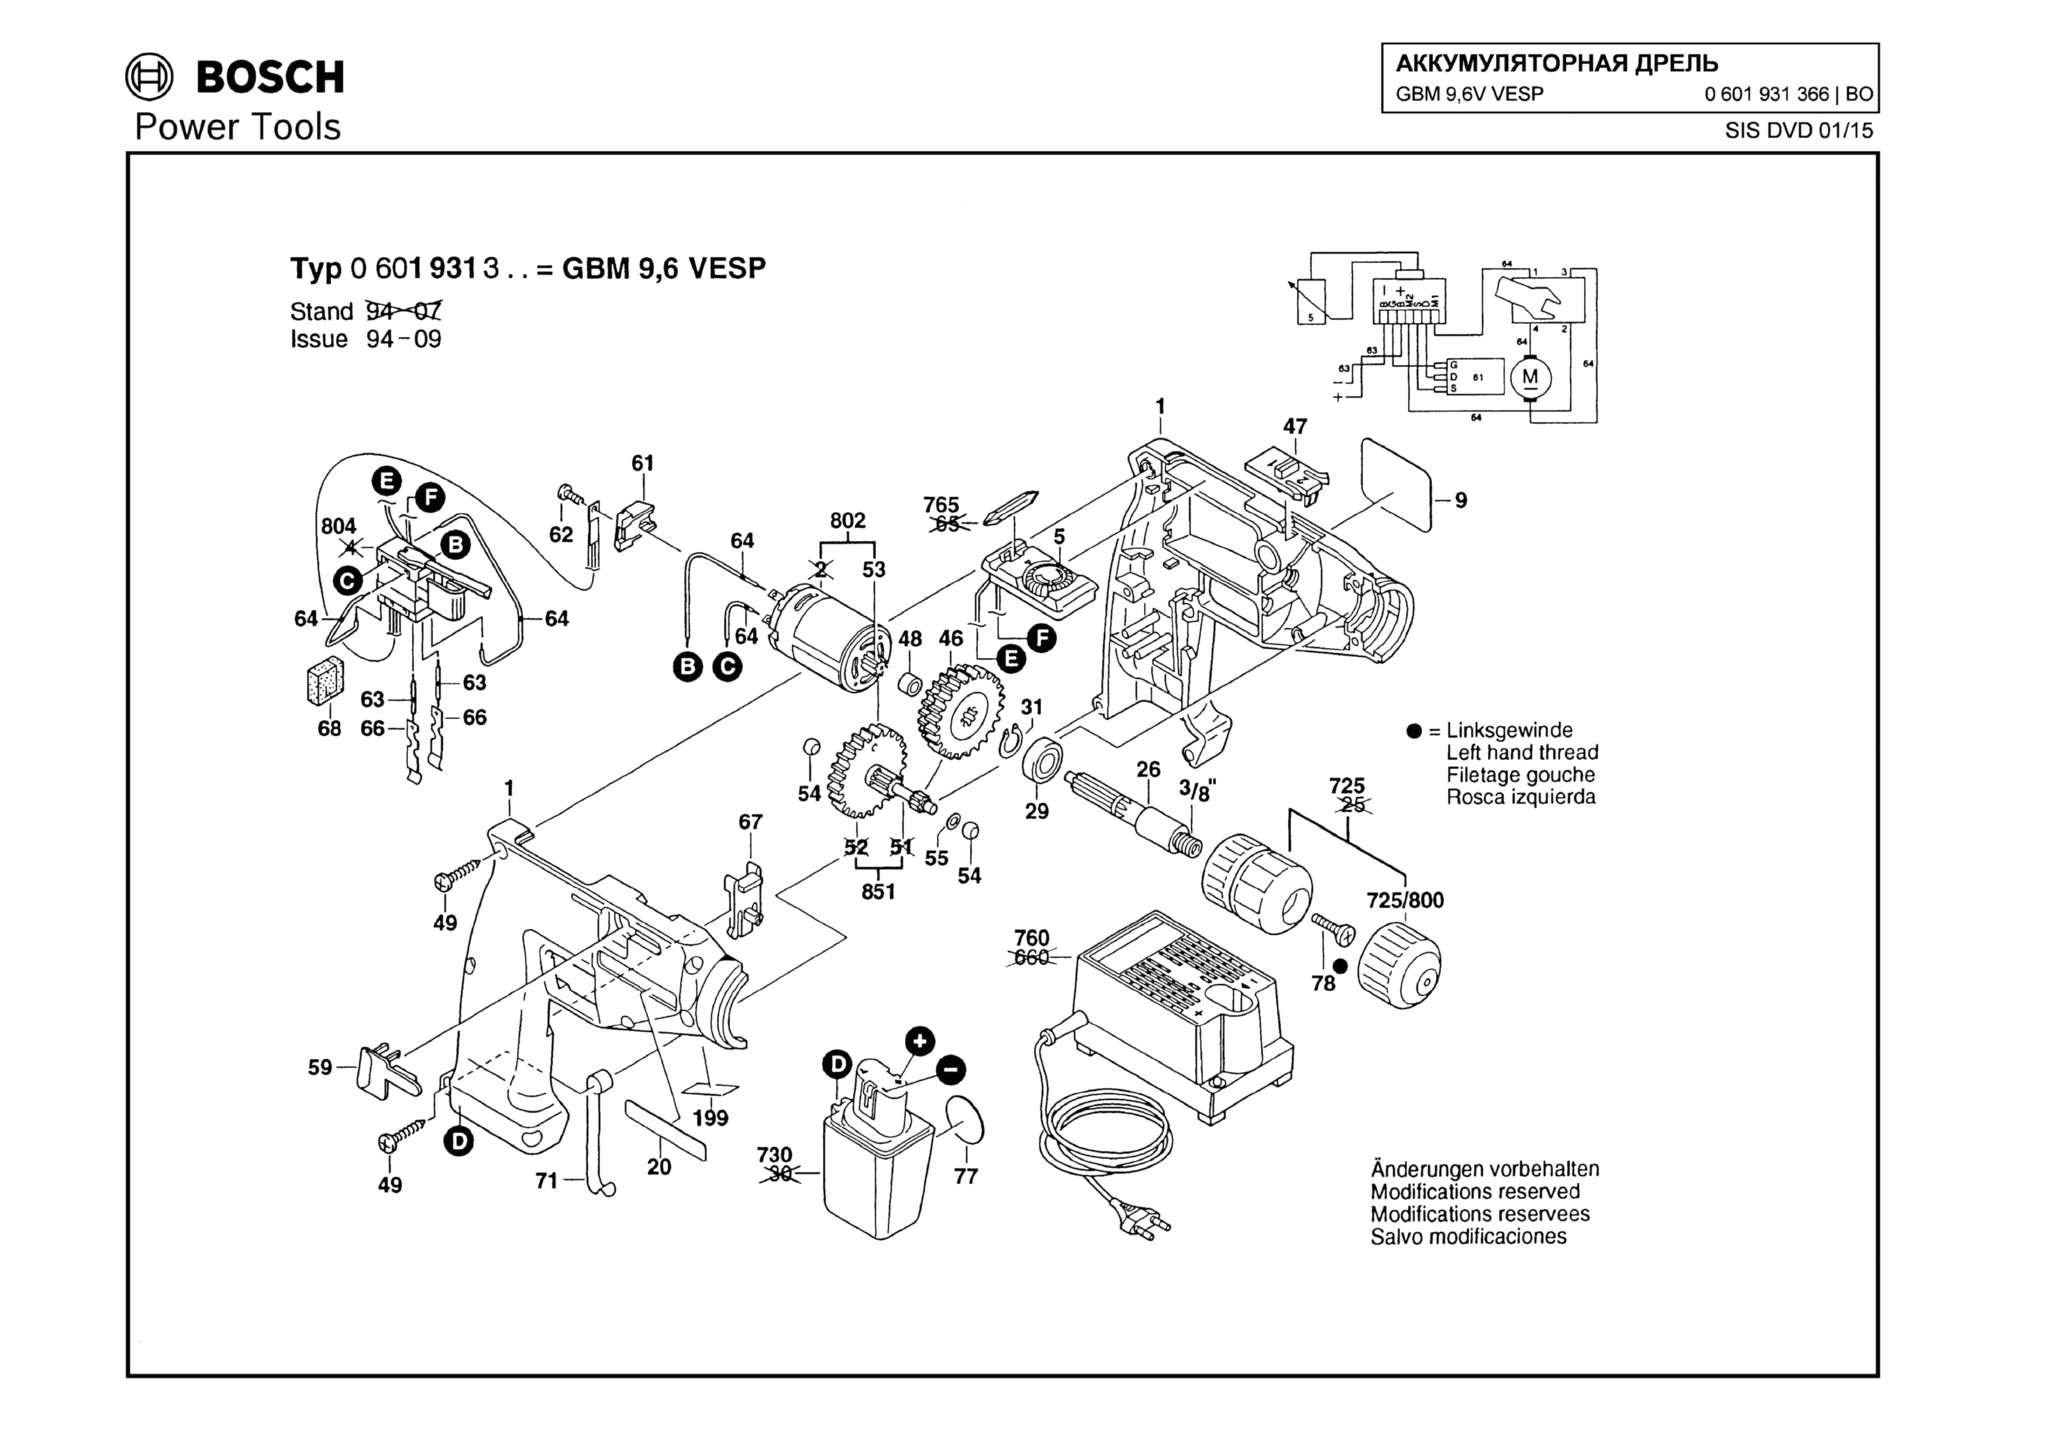 Запчасти, схема и деталировка Bosch GBM 9,6V VESP (ТИП 0601931366)